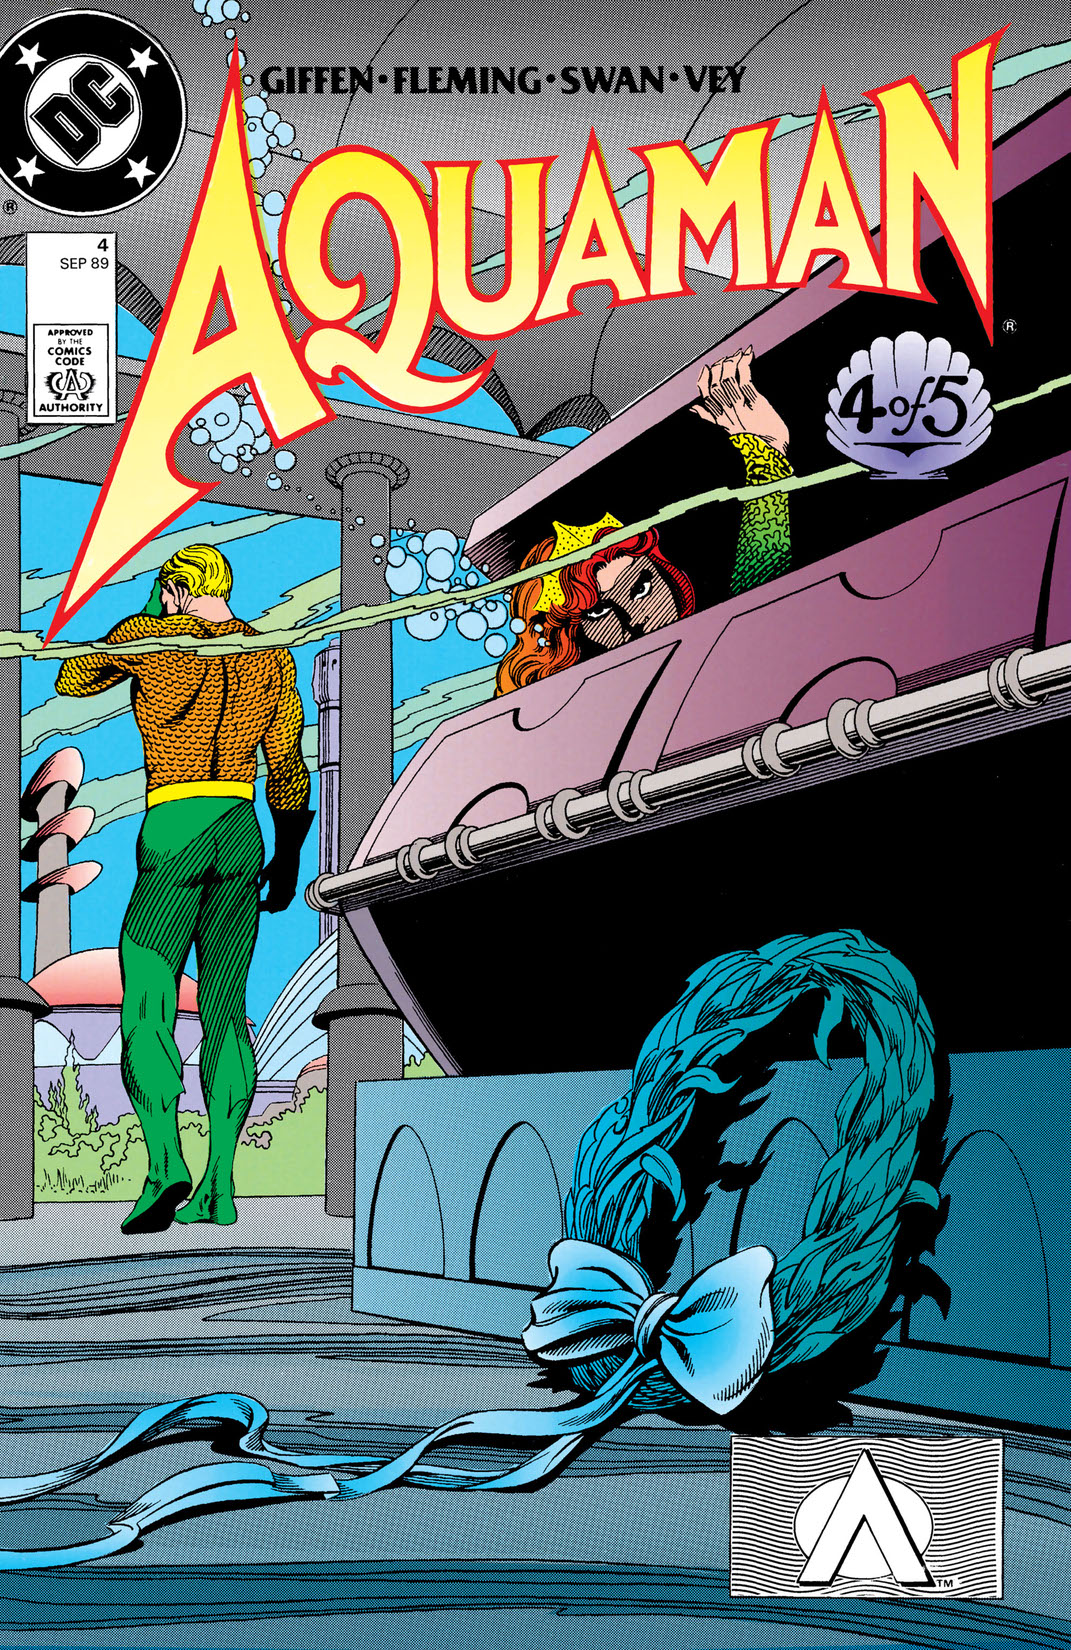 Aquaman (1989-1989) #4 preview images